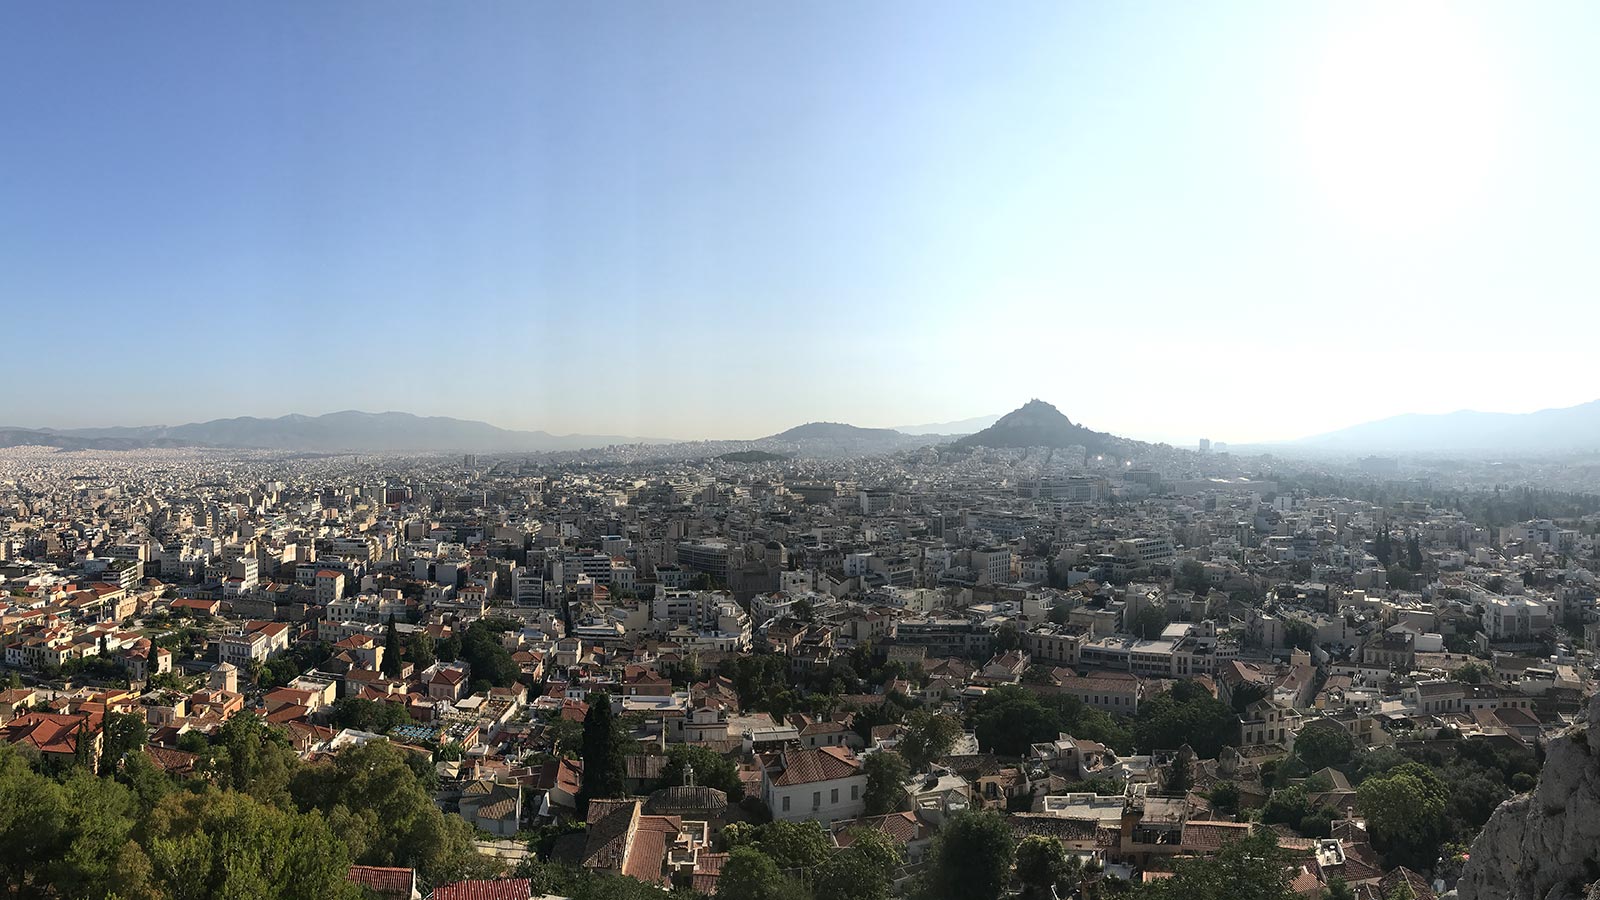 Birds eye view of Athens, Greece. Athens has me